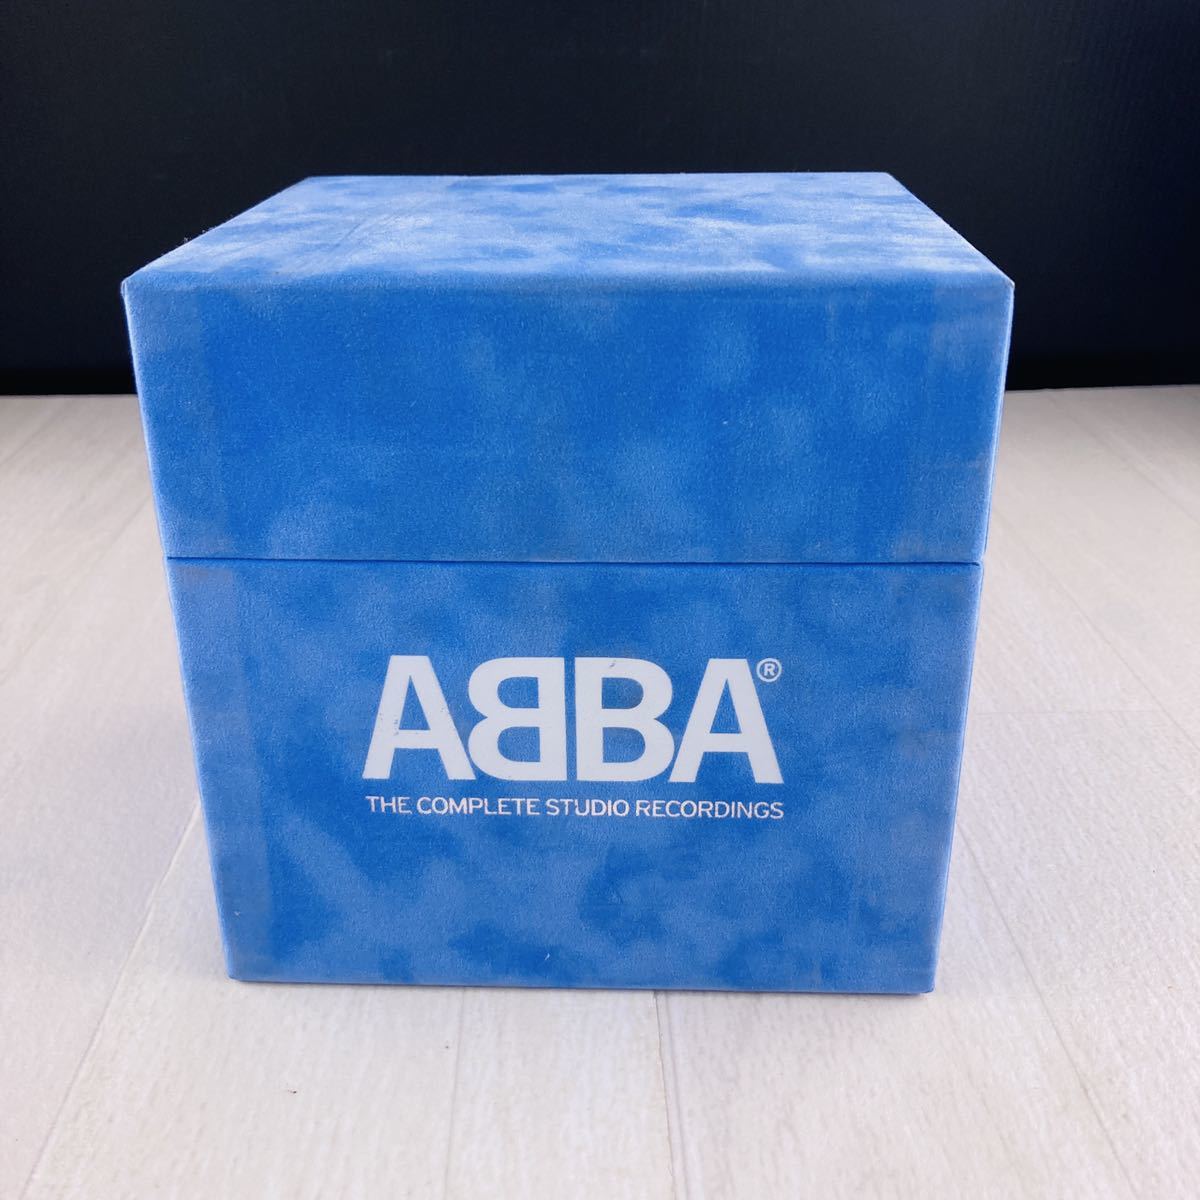 超話題新作 11枚組 RECORDINGS STUDIO COMPLETE THE / ABBA CD C1 CD9枚+ 輸入盤 DVD2枚 ABBA